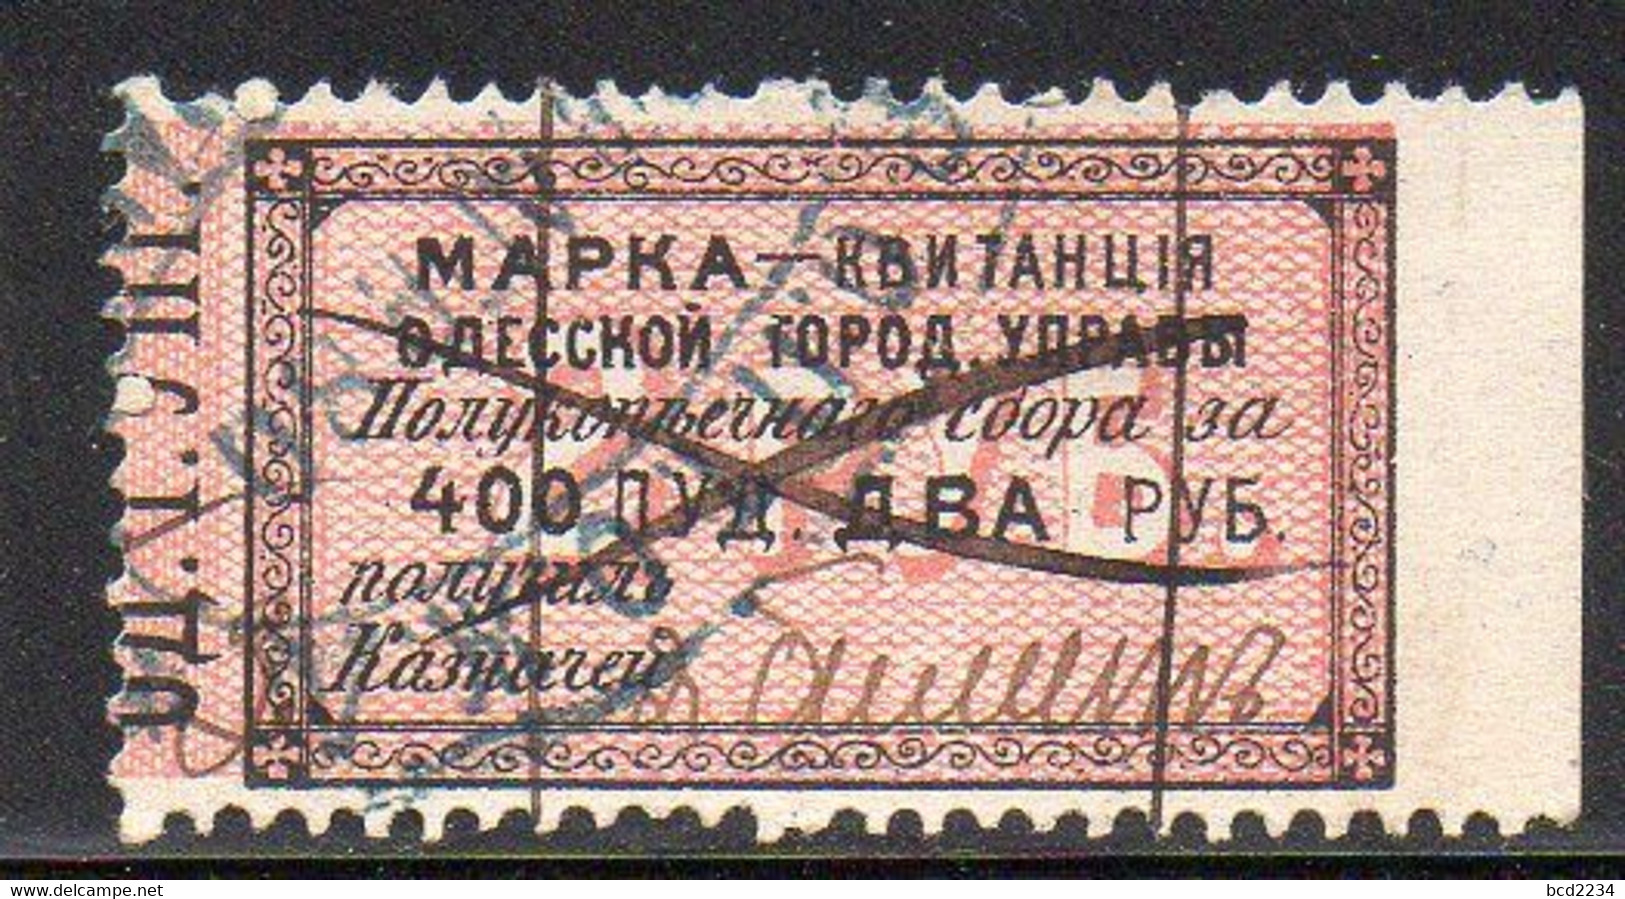 RUSSIA UKRAINE ODESSA MUNICIPAL REVENUE 1879 2R (400) BLACK & PINK BAREFOOT #23 BORDER WITH SCROLLS MARGIN RIGHT FISCAUX - Fiscali